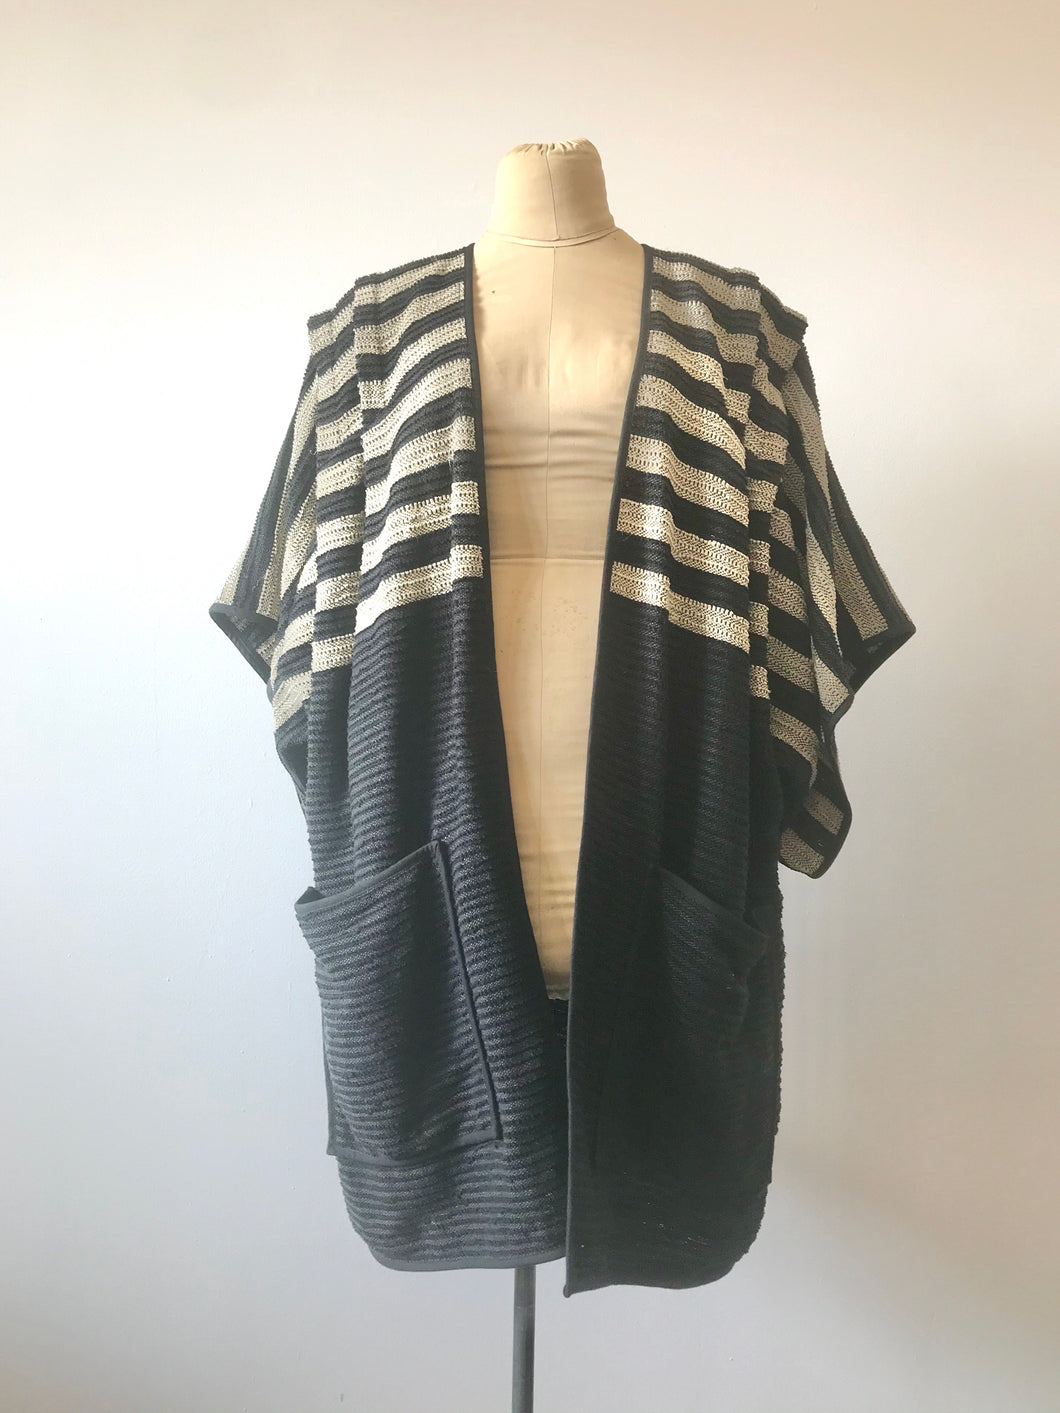 1980's Striped Avante Garde Kimono Jacket by Laise Adzer